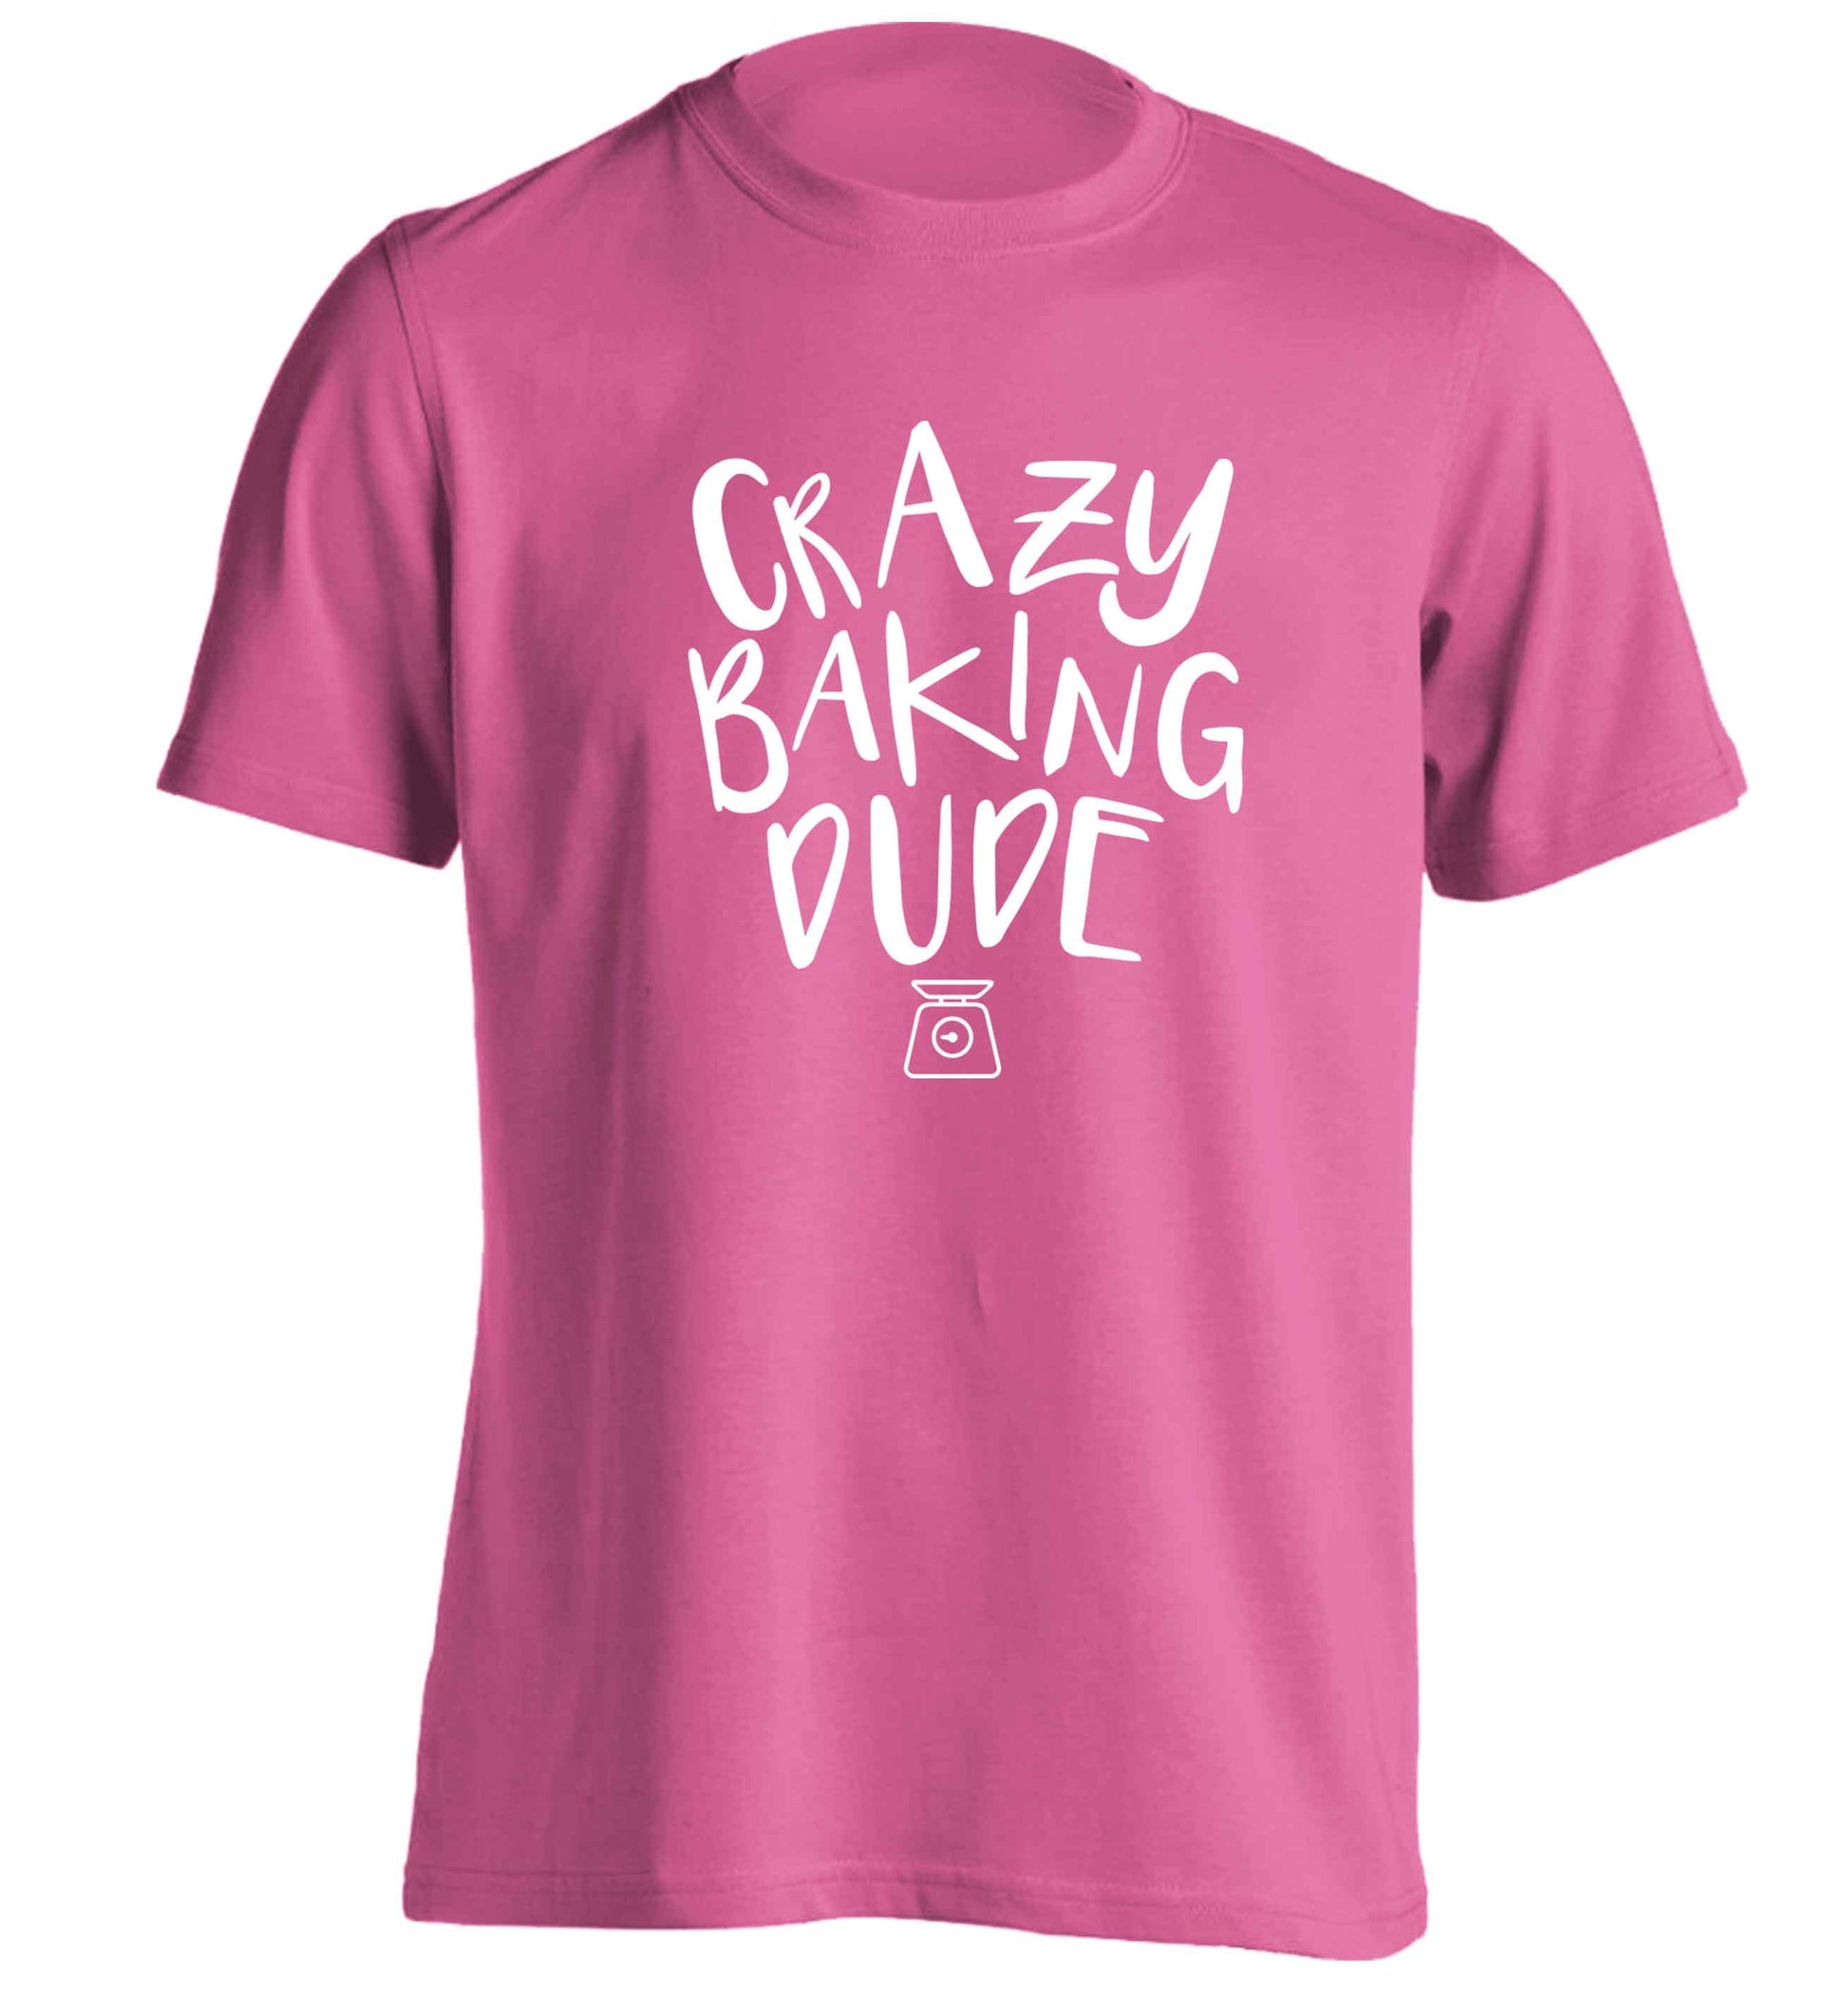 Crazy baking dude adults unisex pink Tshirt 2XL